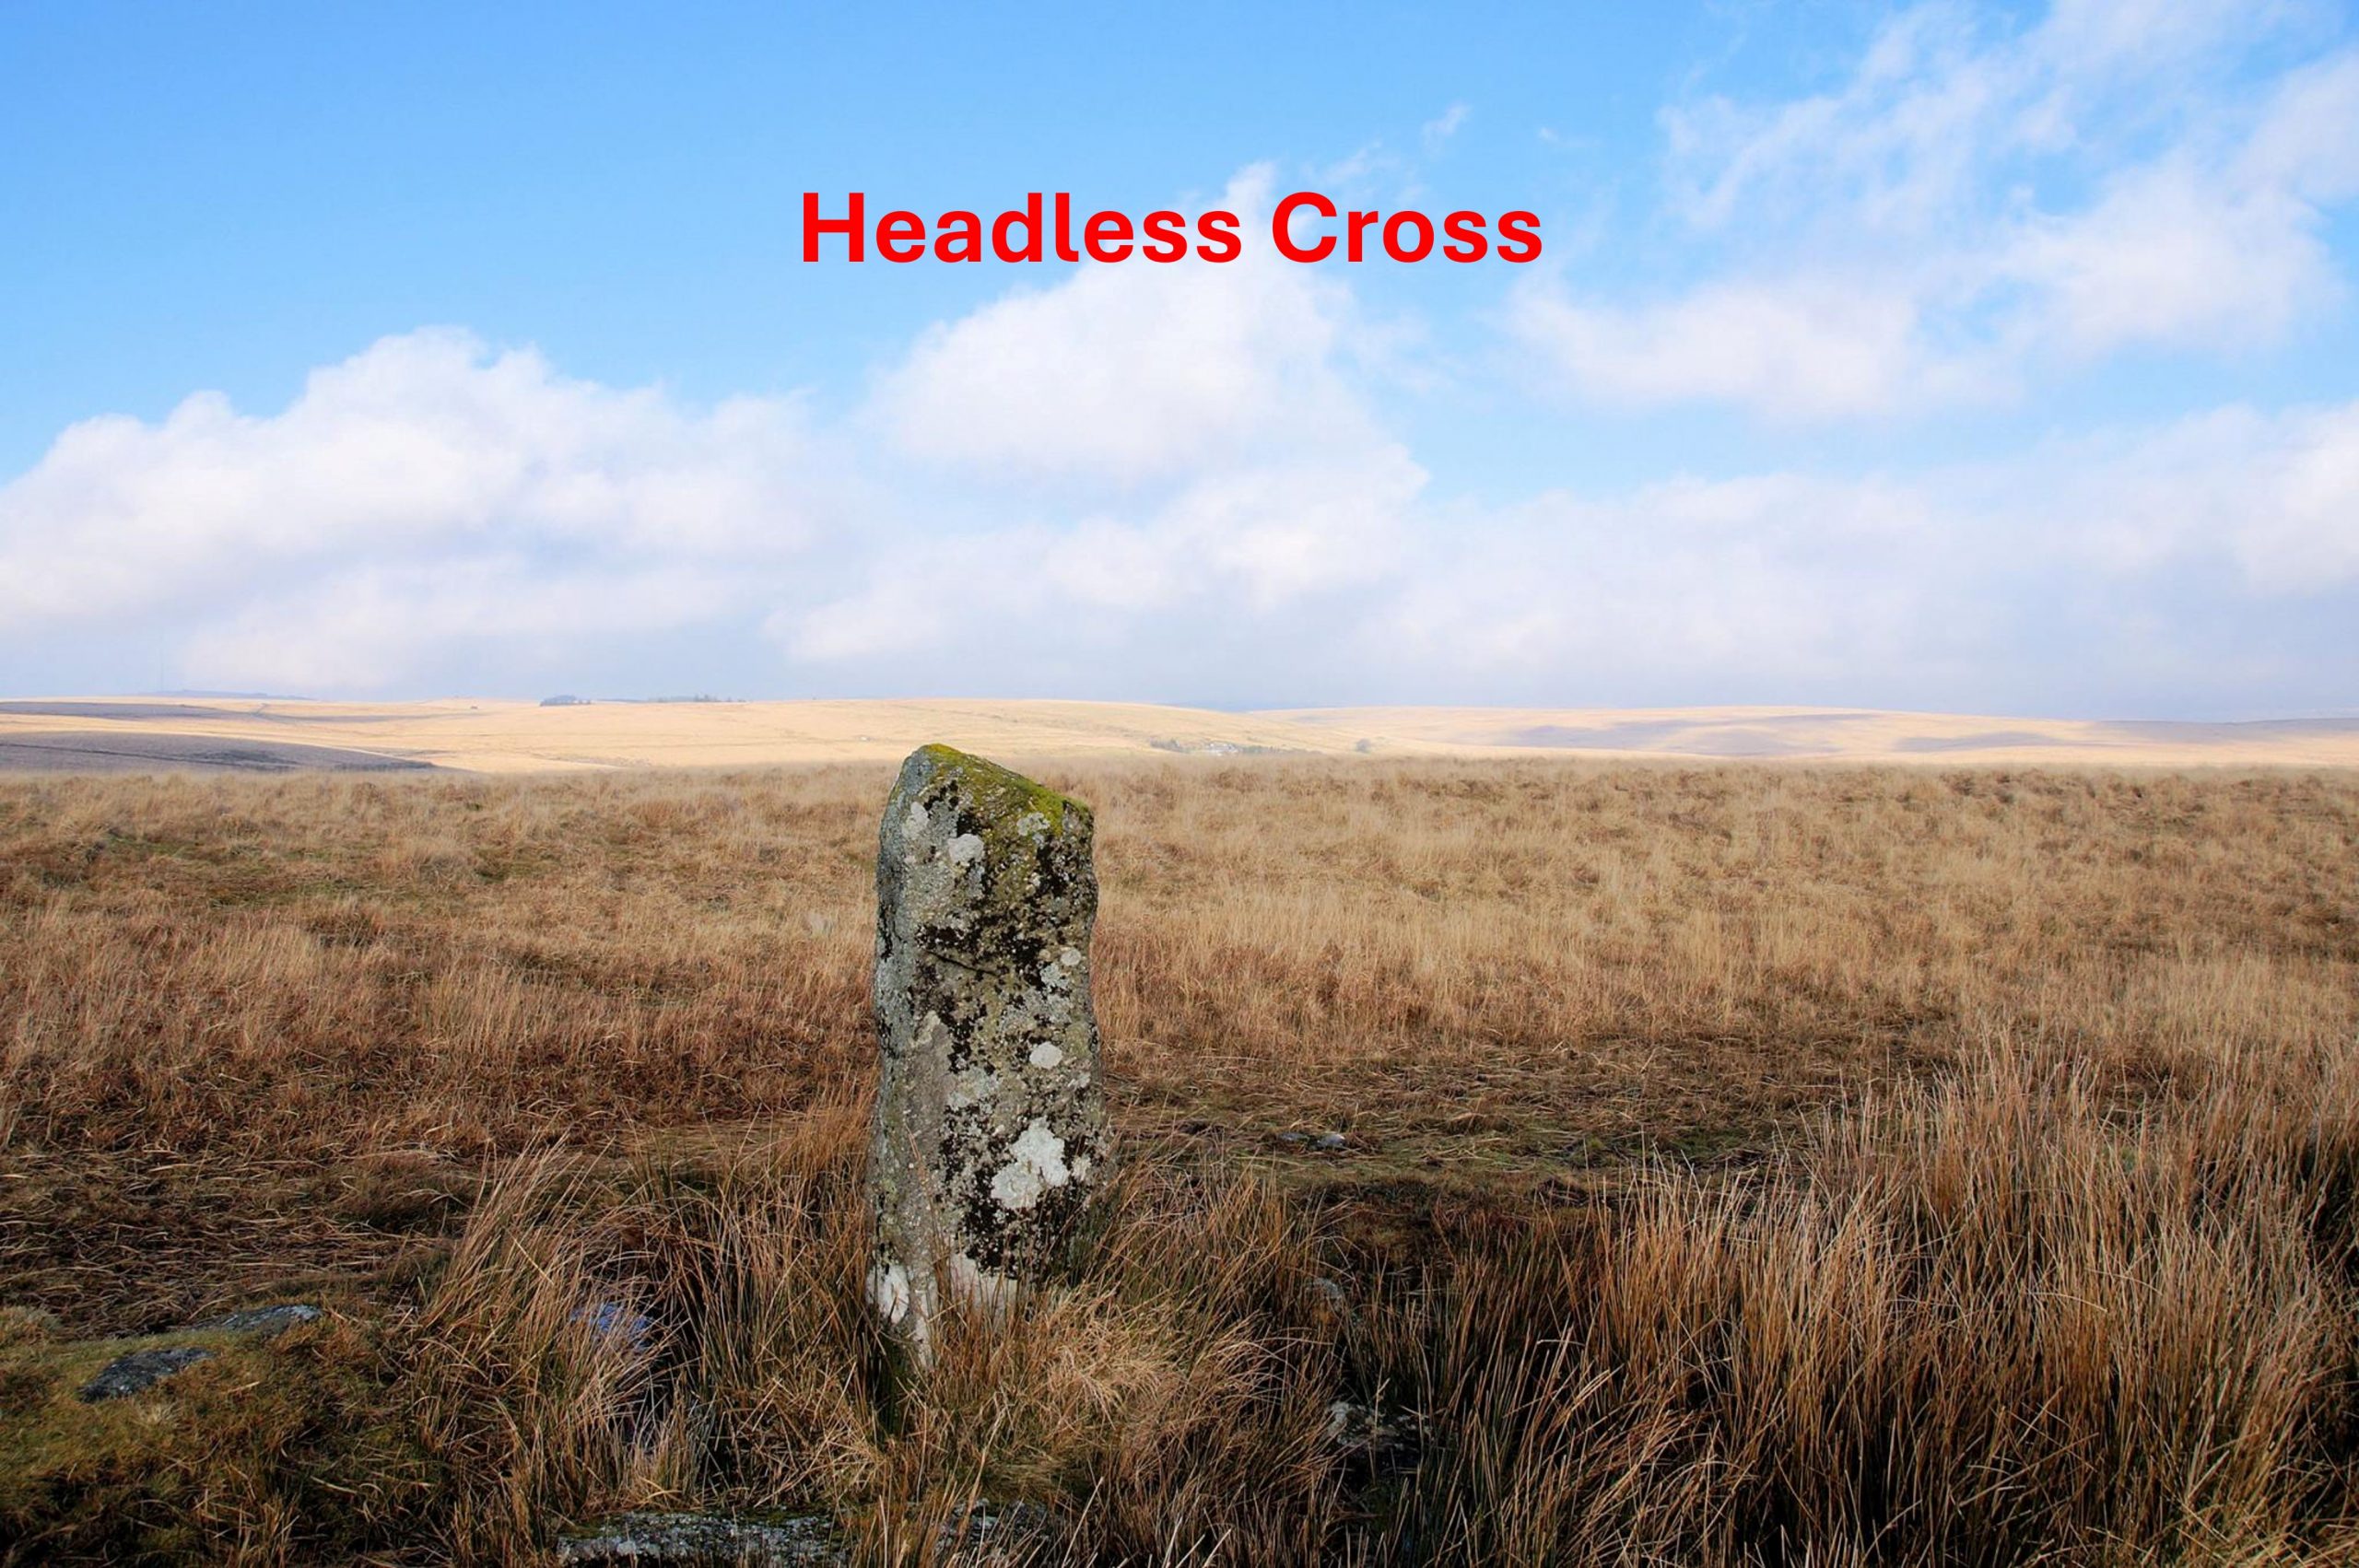 10. Headless Cross